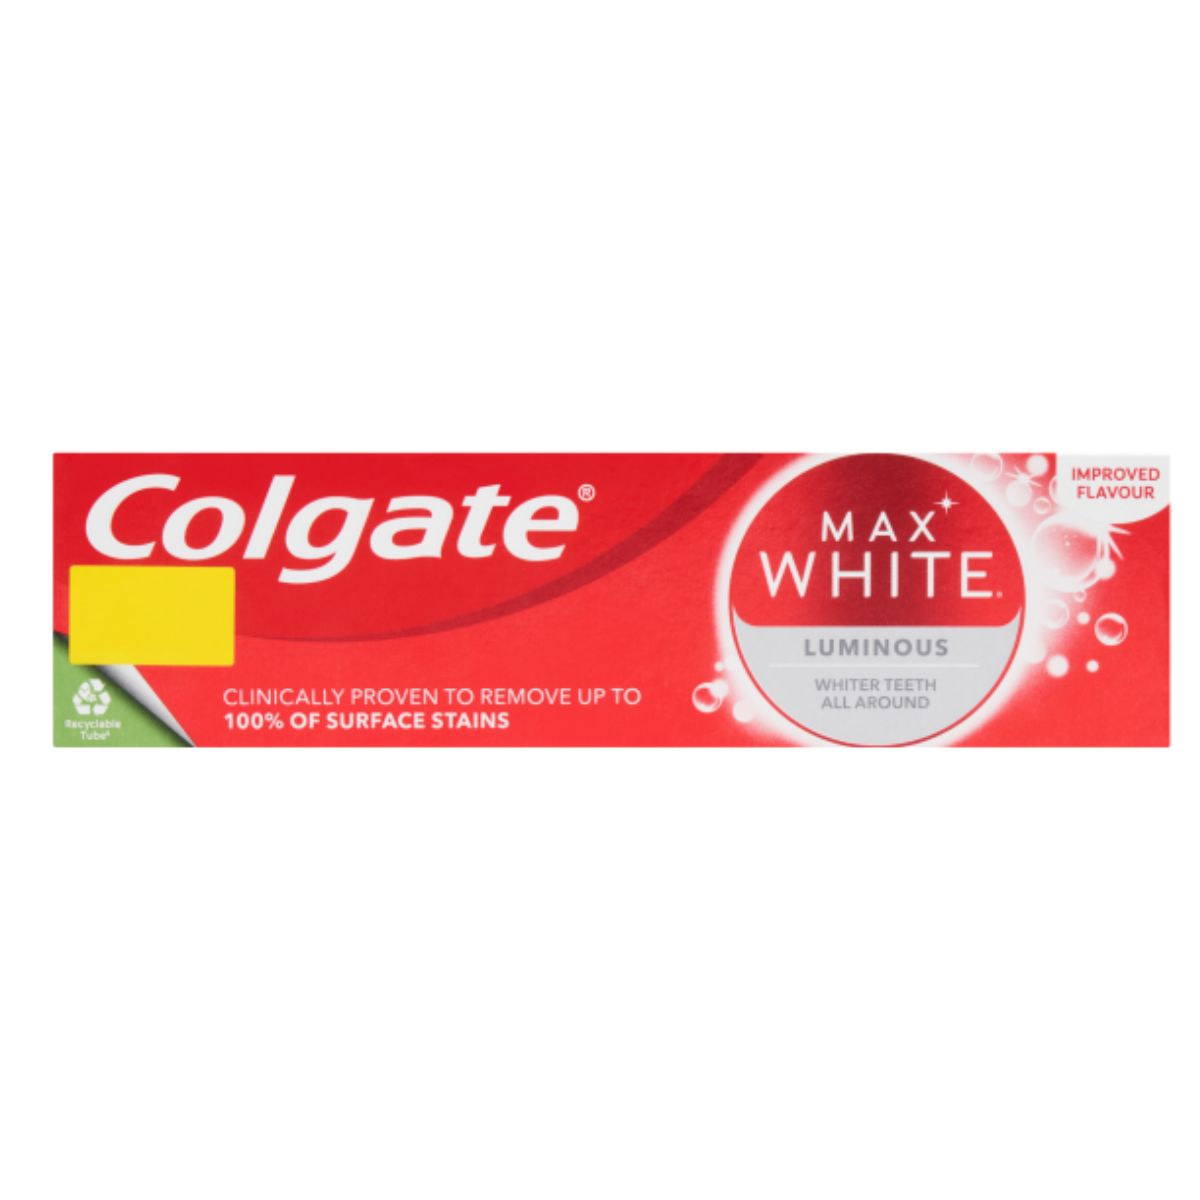 Colgate Max White Luminous whitening toothpaste.